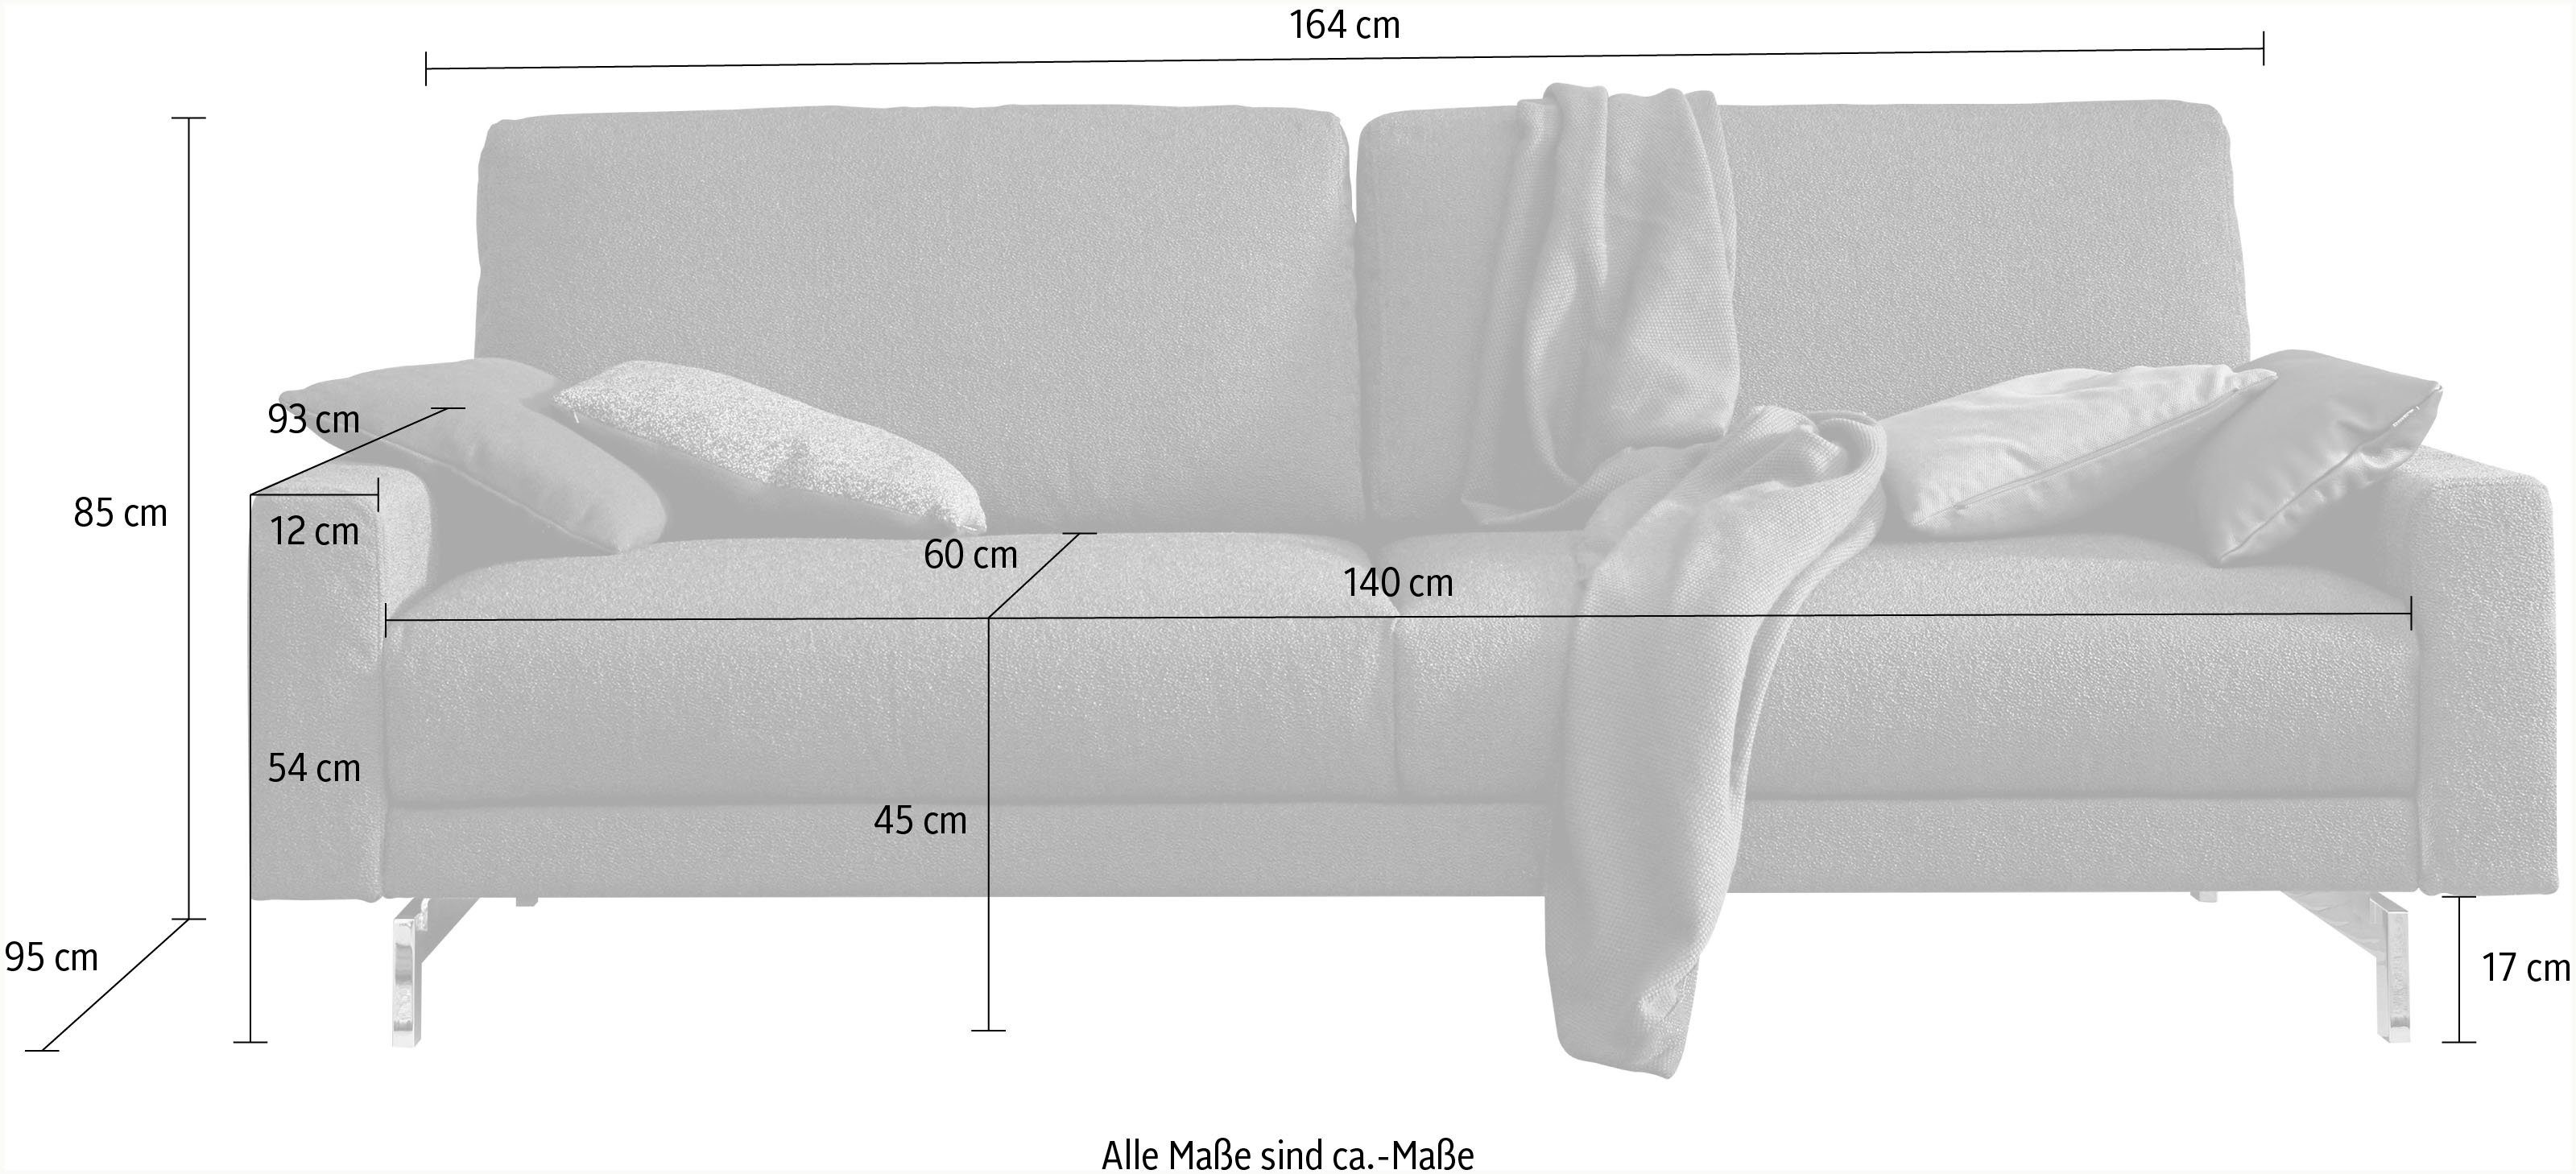 hs.450, glänzend, sofa 164 cm chromfarben niedrig, 2-Sitzer Armlehne Breite Fuß hülsta